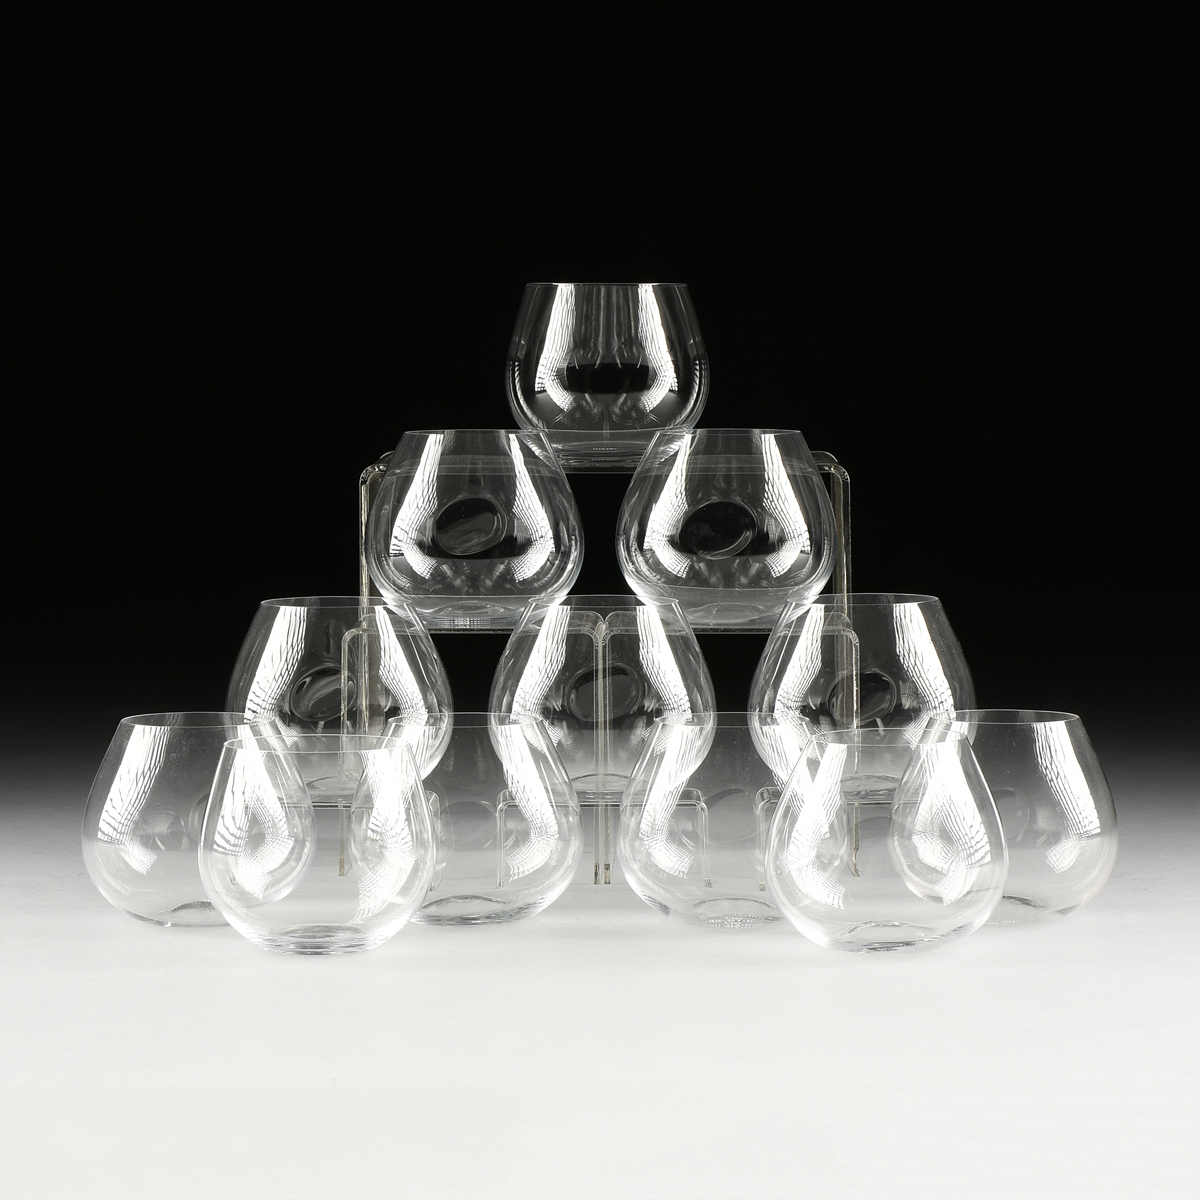 A SET OF TWELVE TIFFANY & CO. ELSA PERETTI DESIGNED THUMB PRINT WINE GLASSES, SPANISH, MODERN, clear